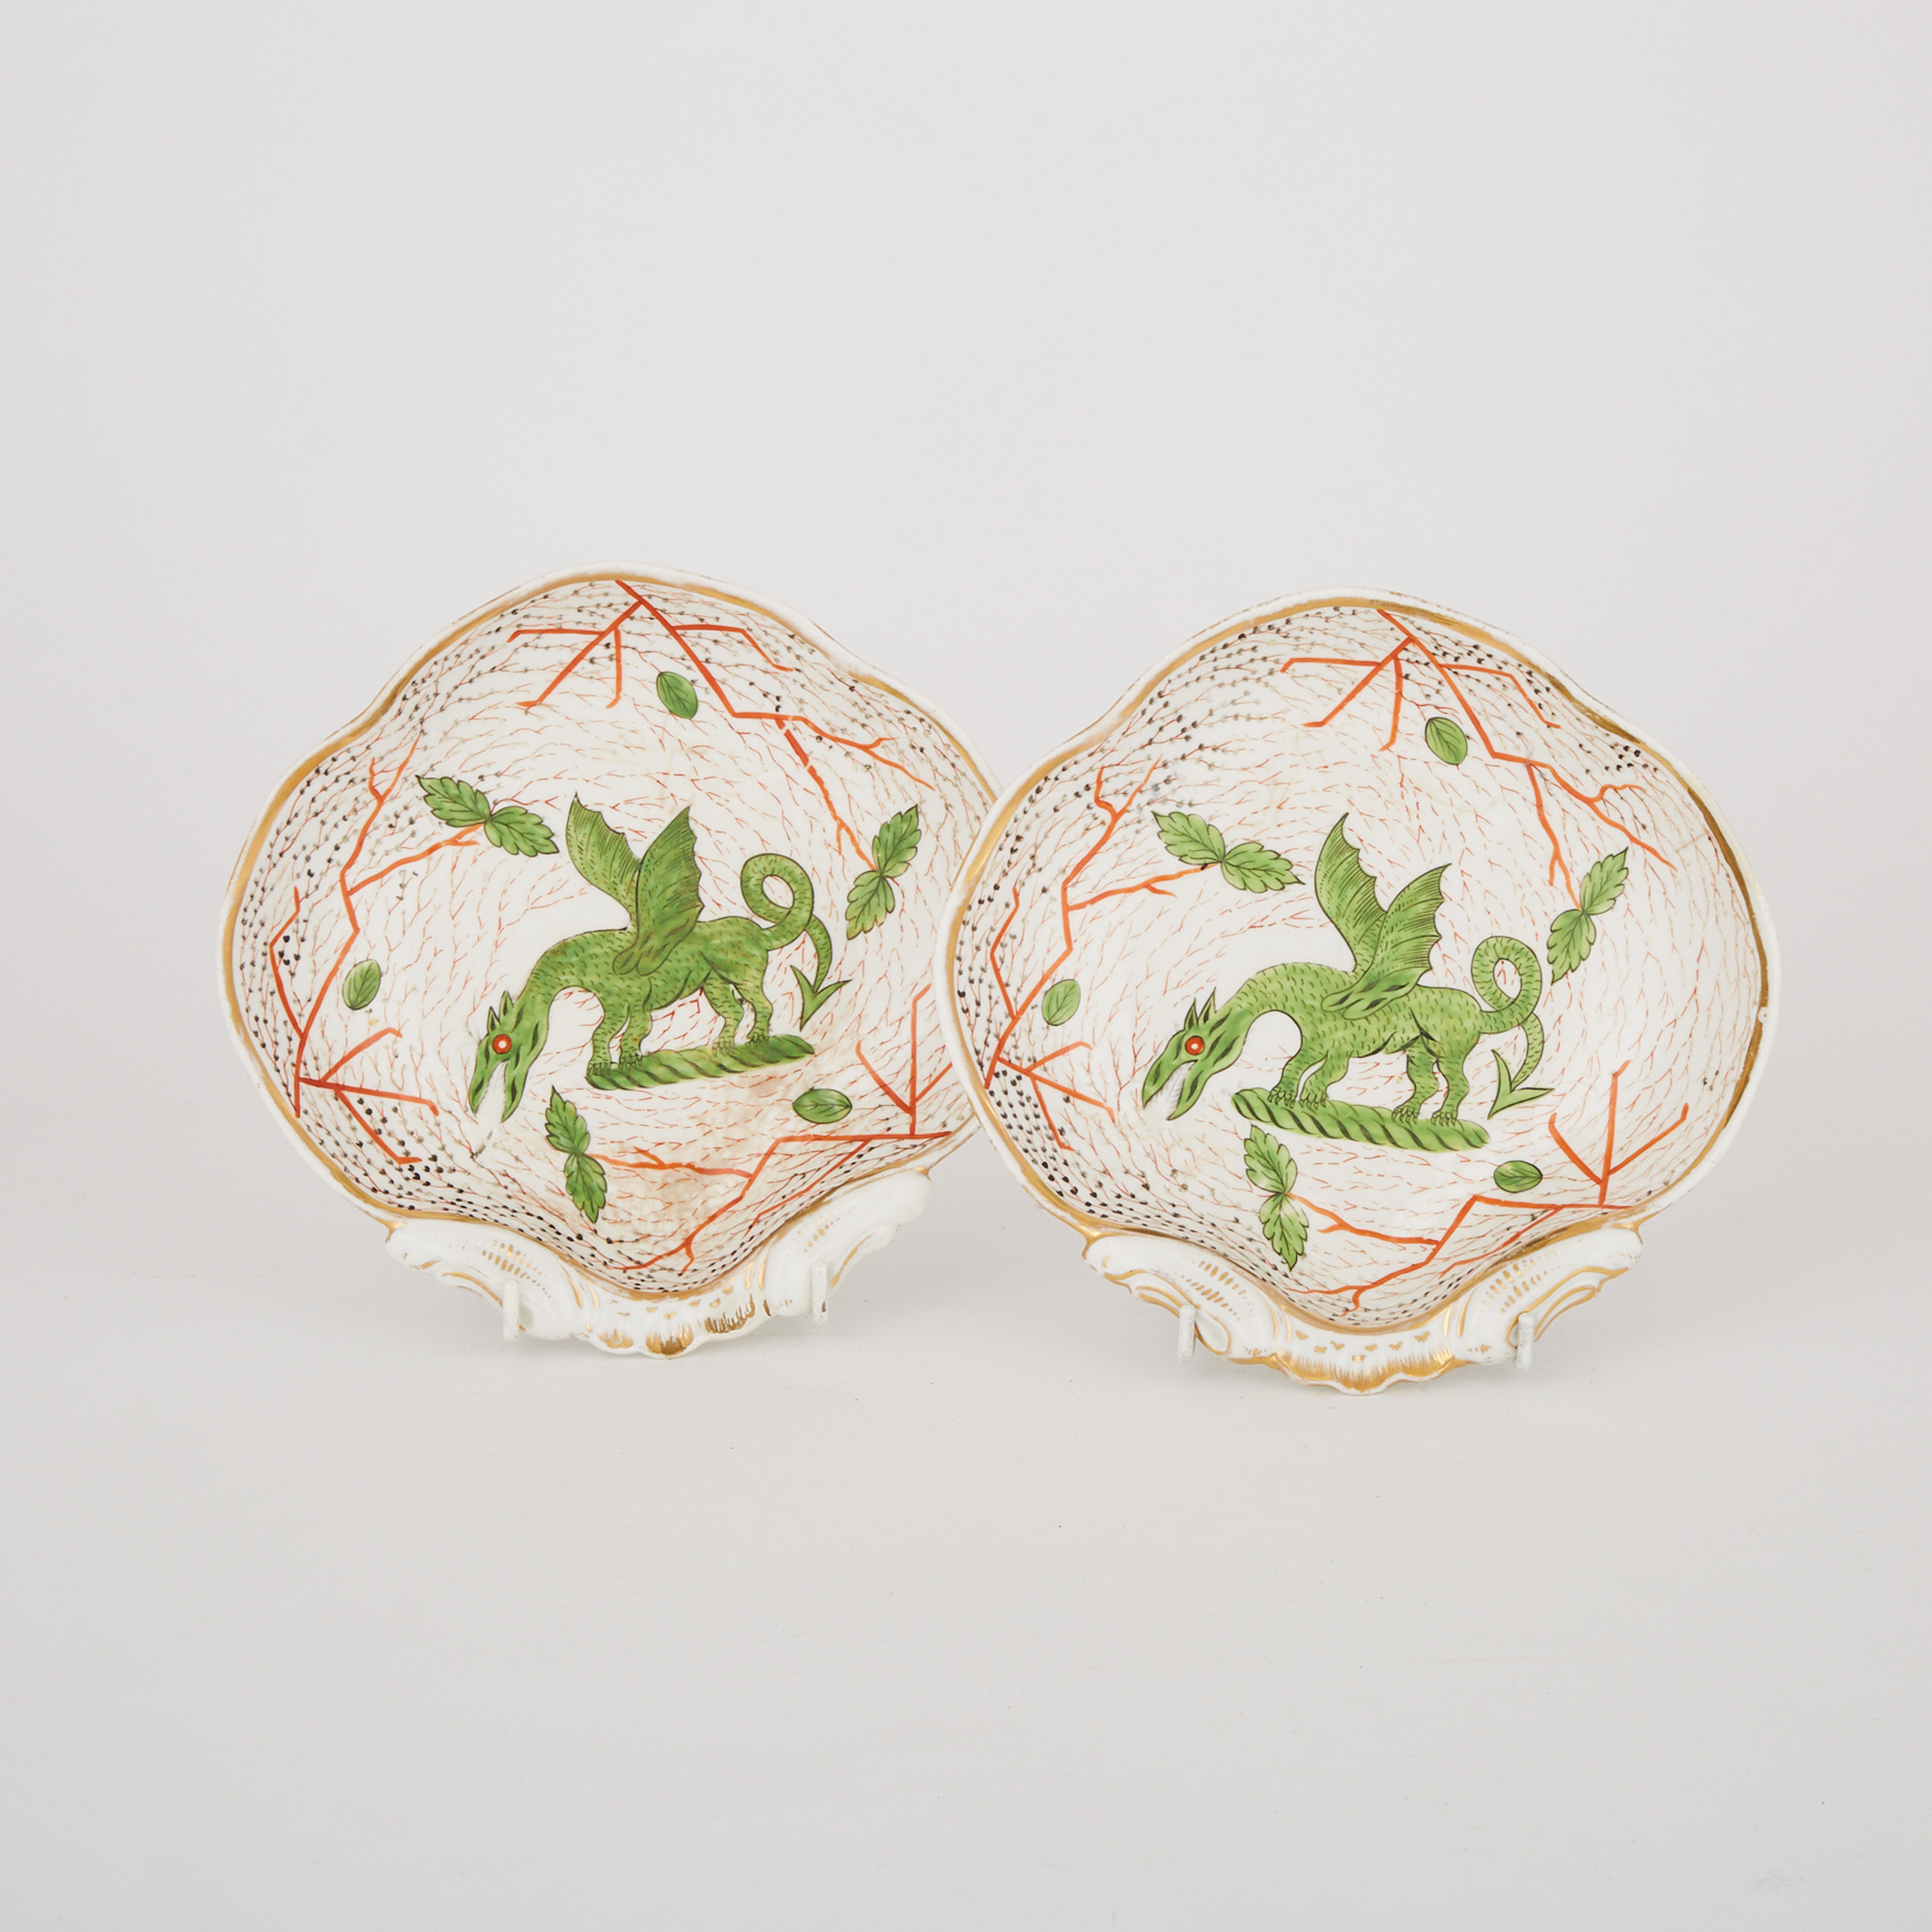 Pair of Coalport Green Dragon Shell Dishes, c.1810